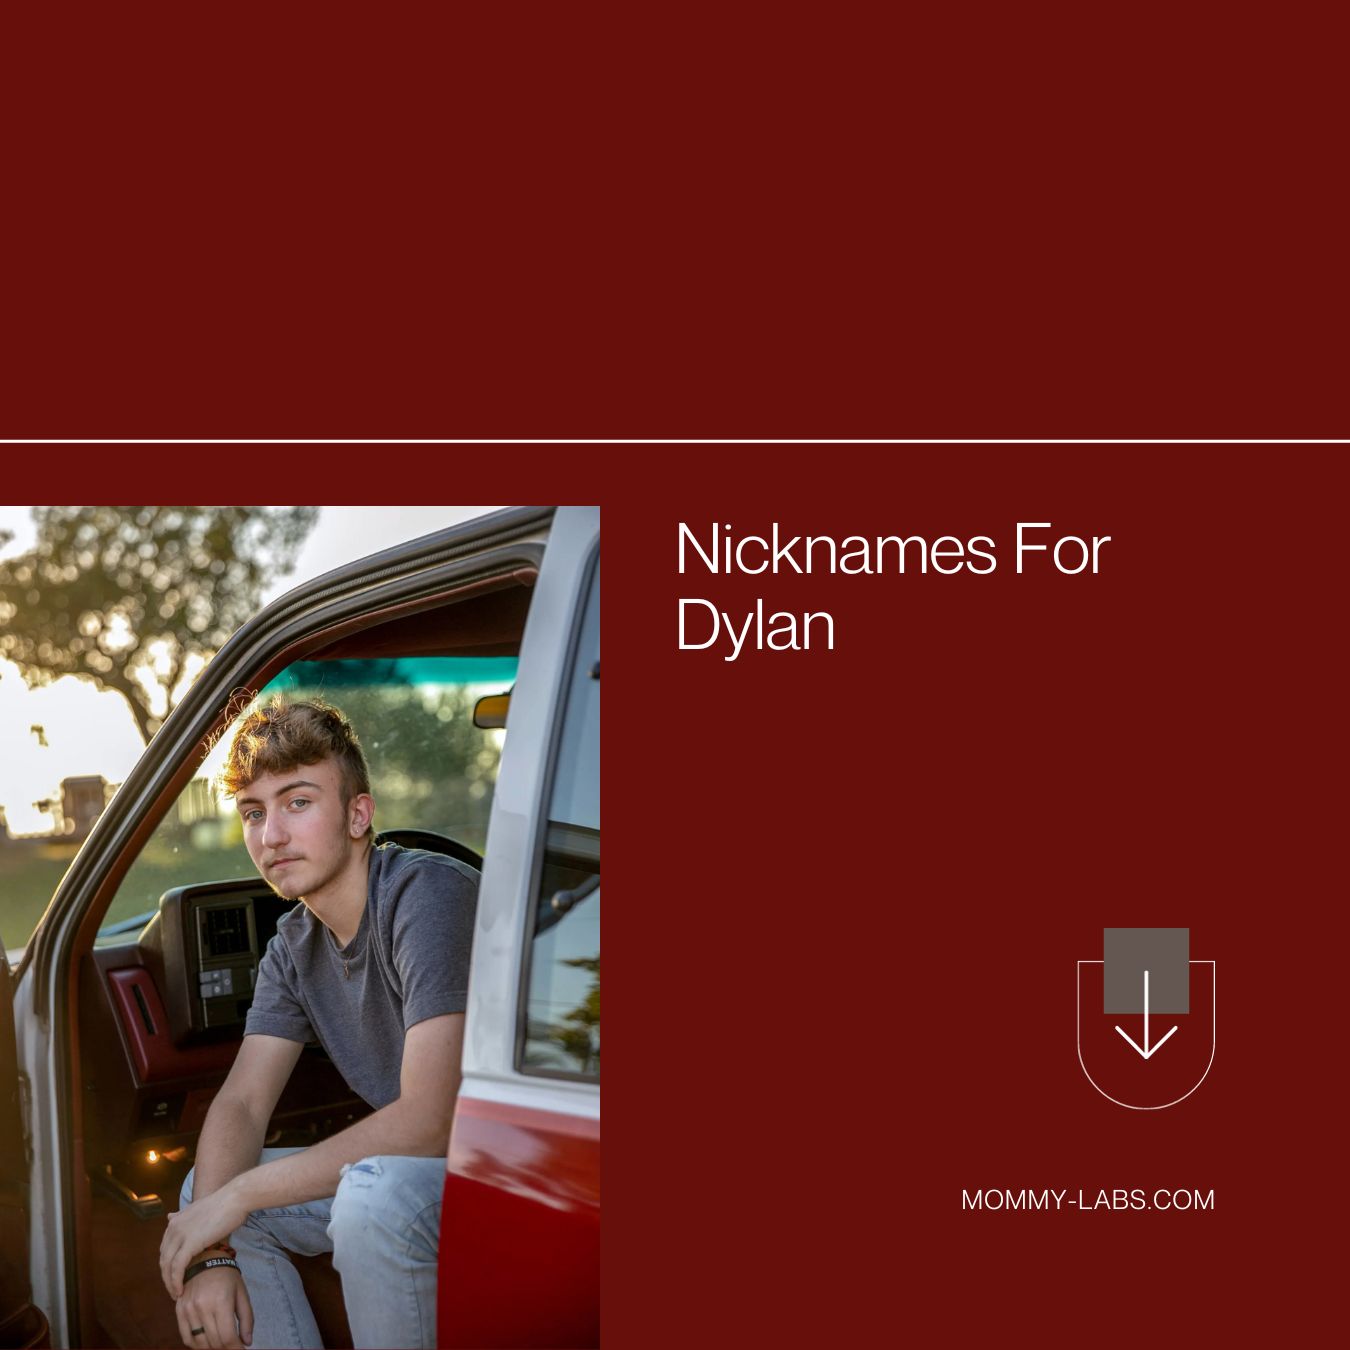 Nicknames For Dylan